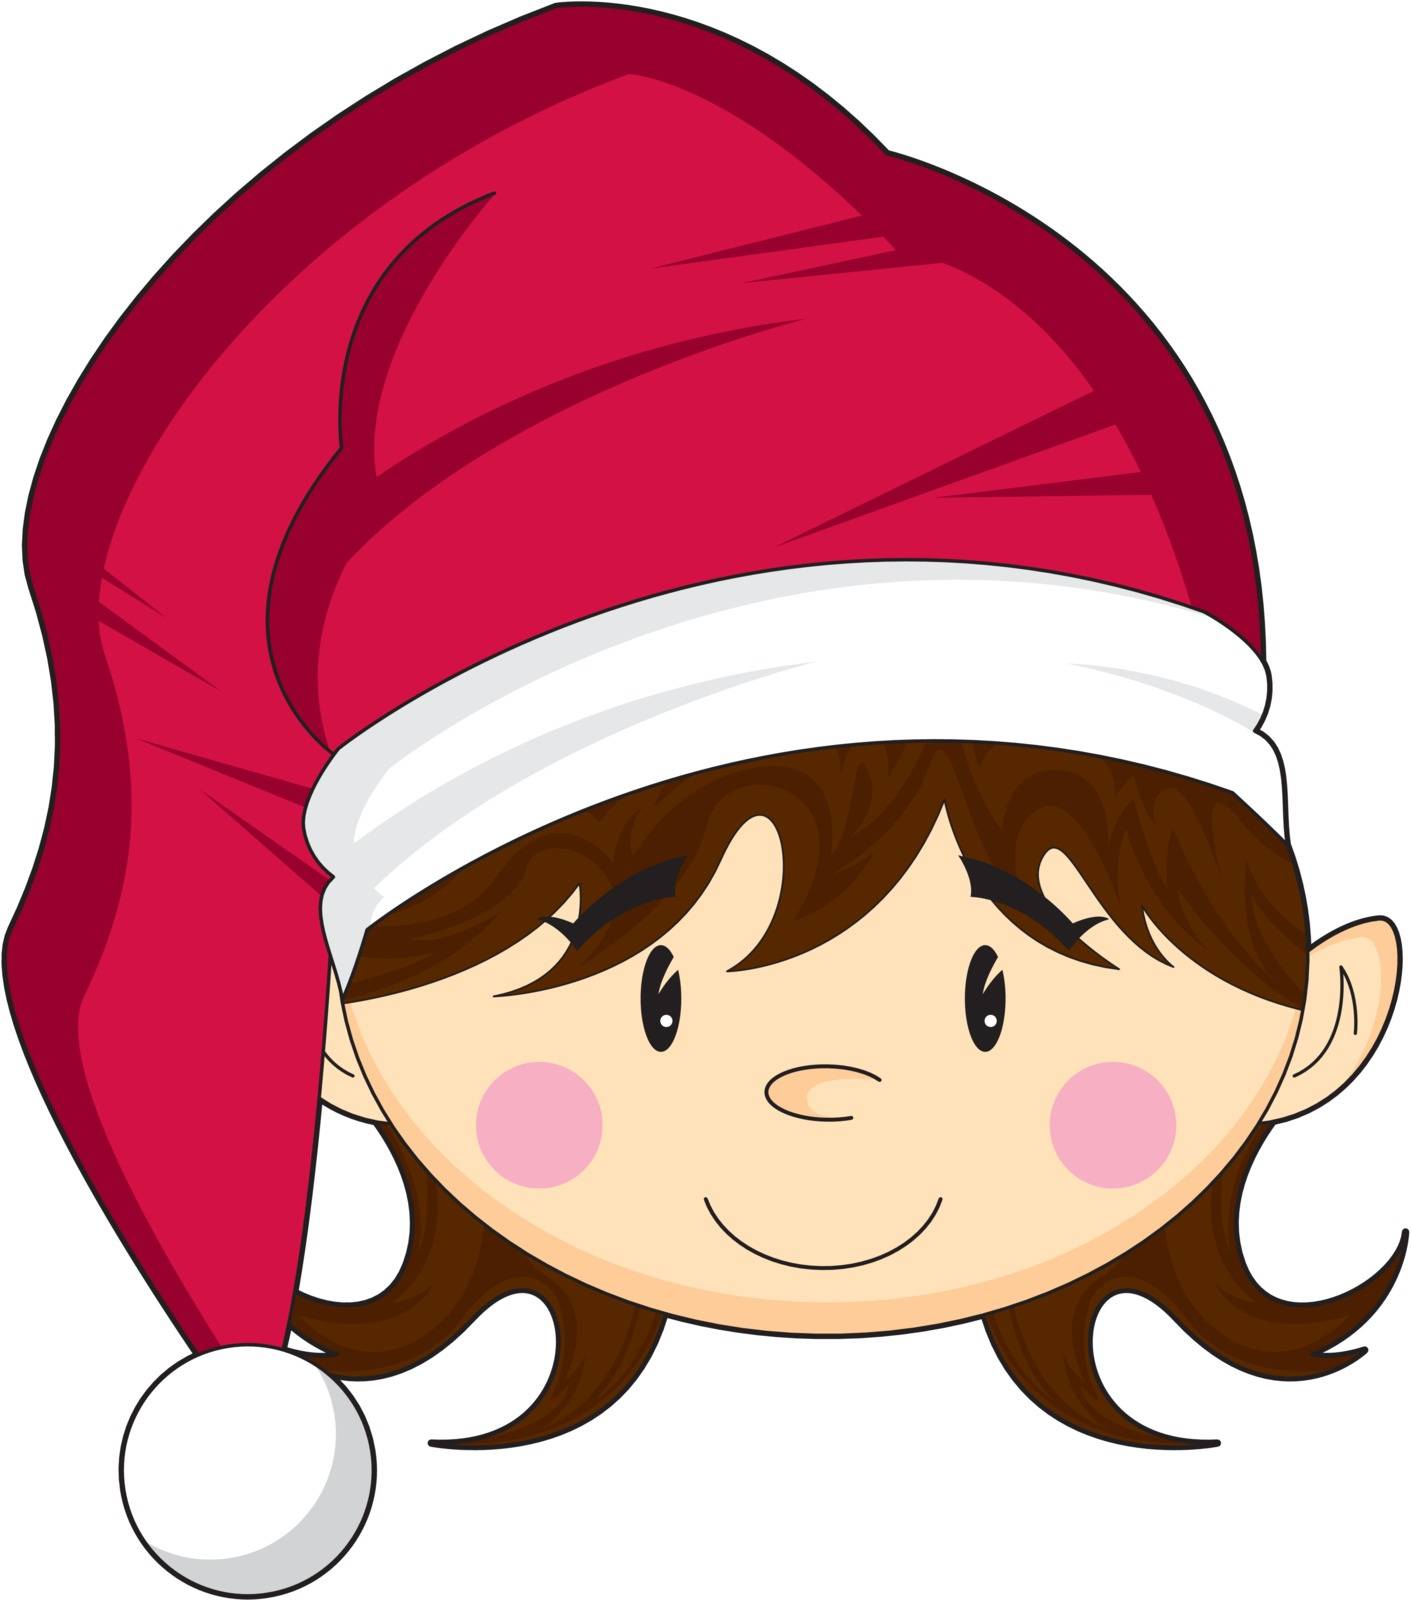 Adorably Cute Cartoon Christmas Elf wearing Santa Claus Hat Illustration by Mark Murphy Creative